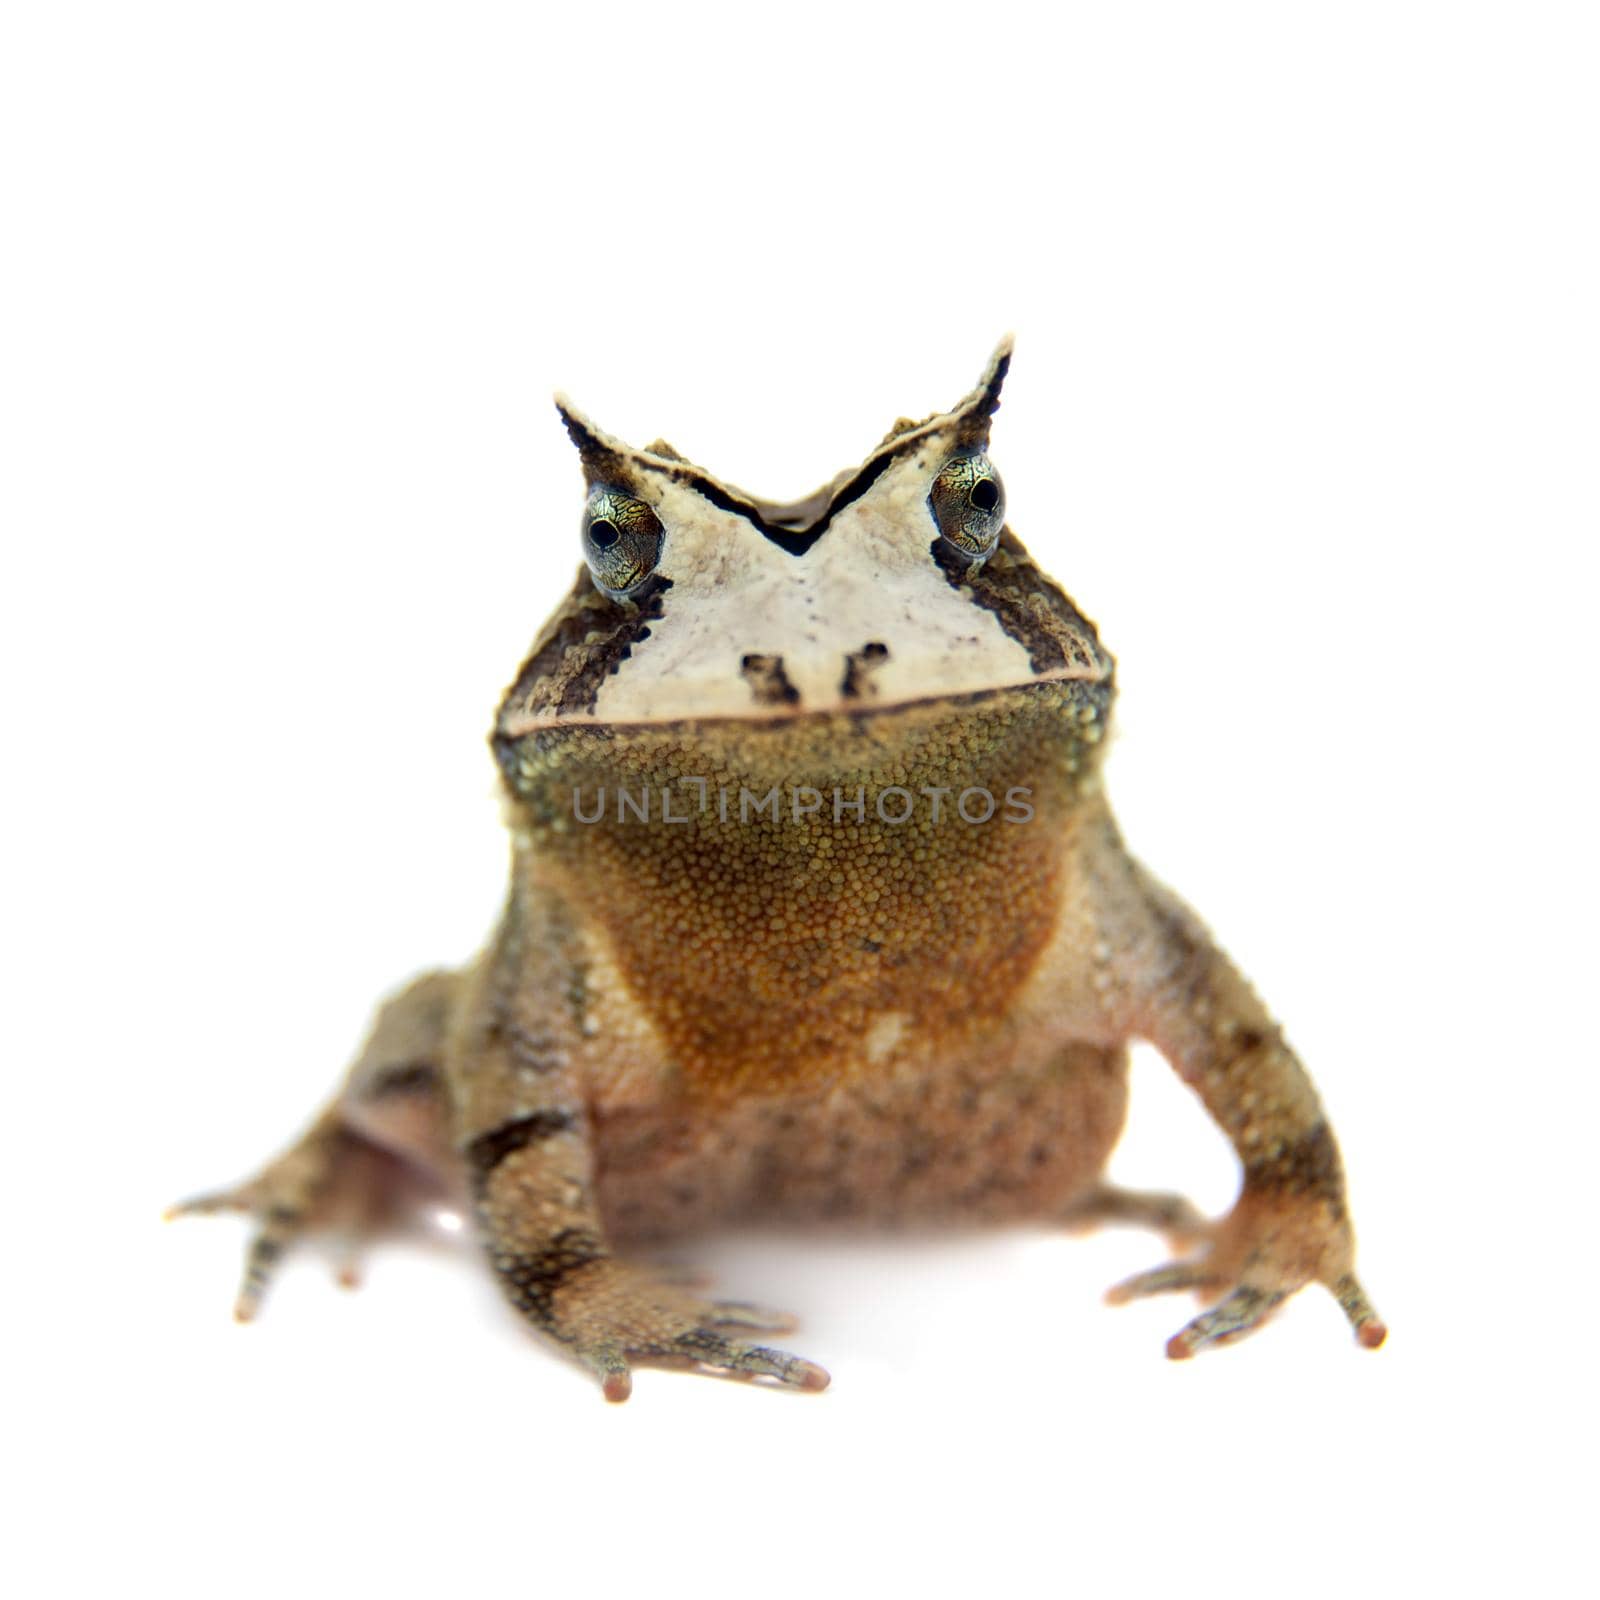 Cerrado toad on white by RosaJay